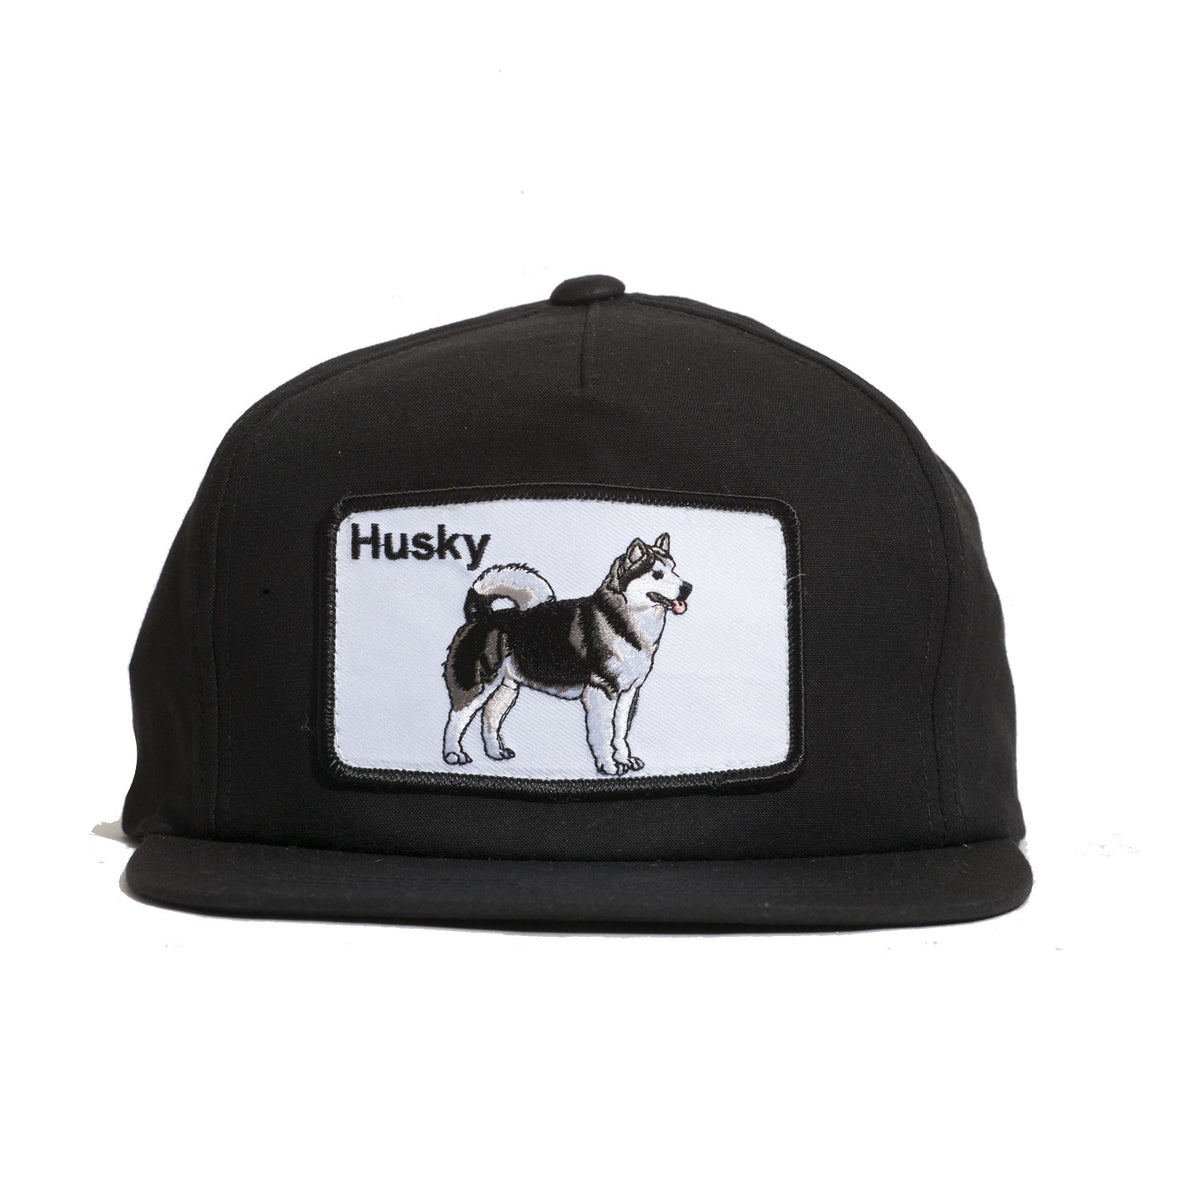 Husky Snapback Black